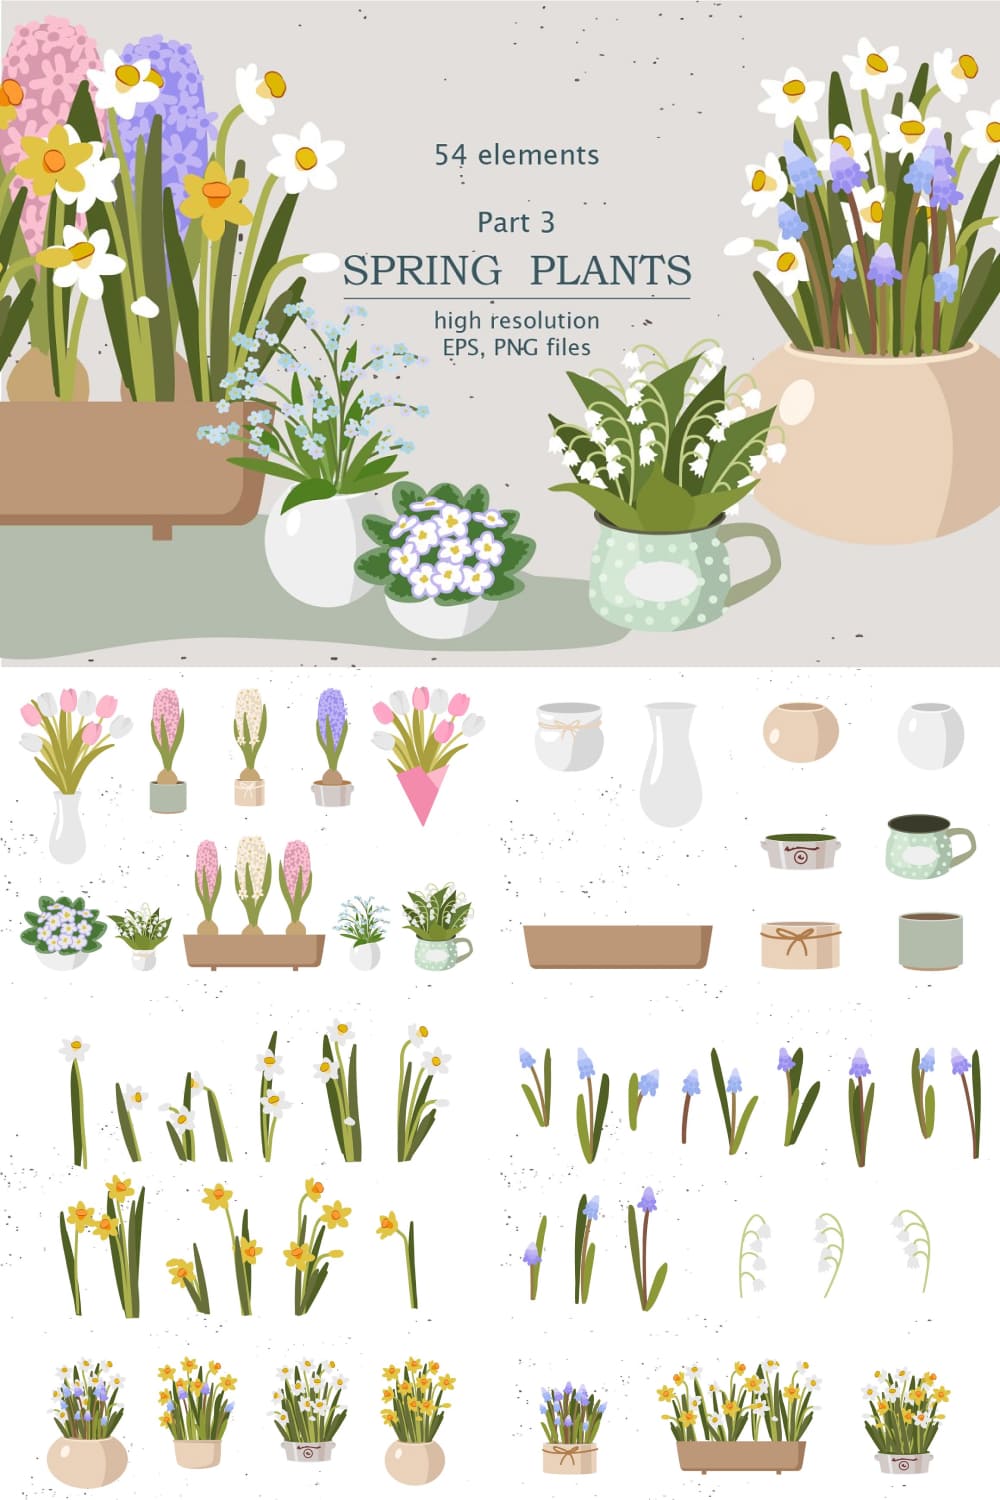 Spring Indoor Plants | Part 3 pinterest image.